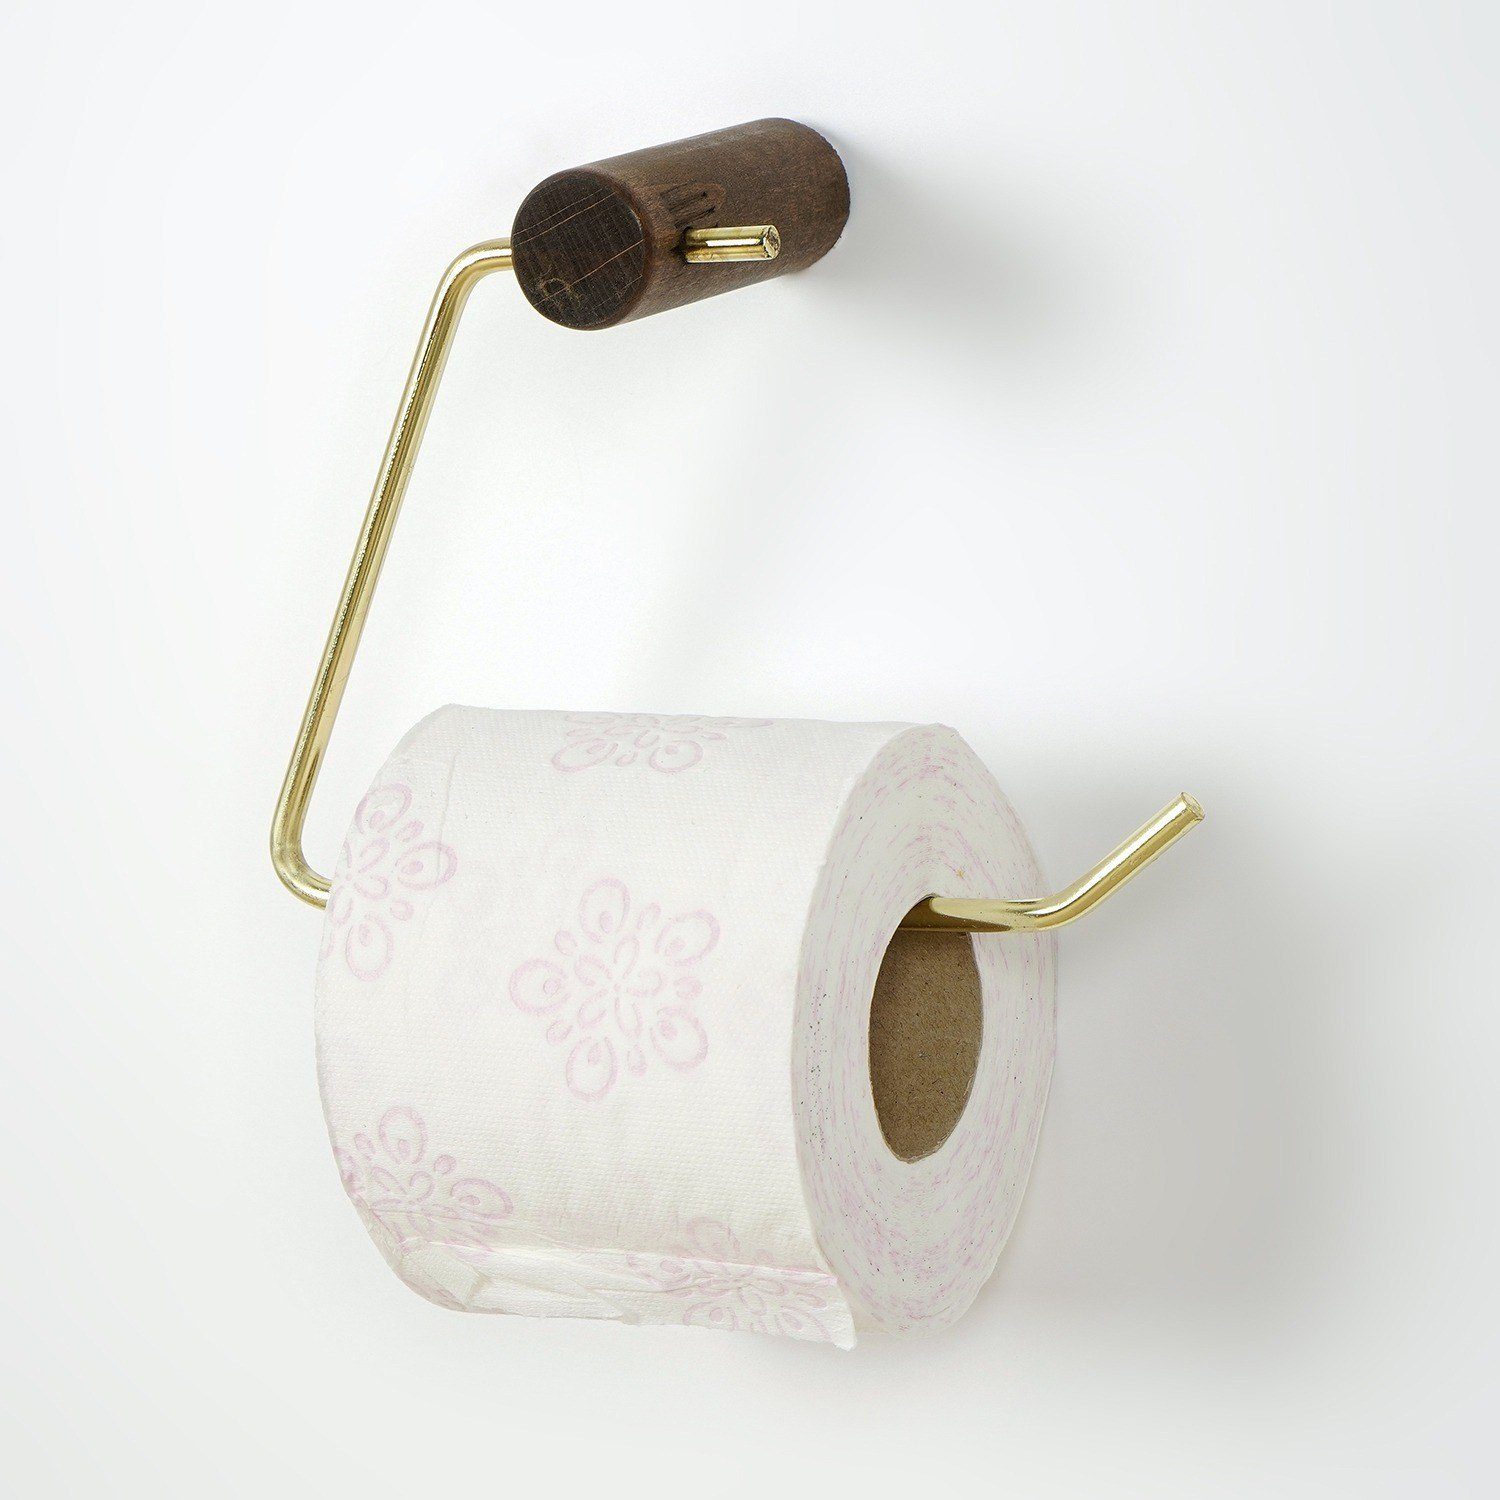 Skye Decor Toilettenpapierhalter WR079EVL, Gold, Toilettenpapierhalter, 18x13x8 cm, 100% Buchenbaum